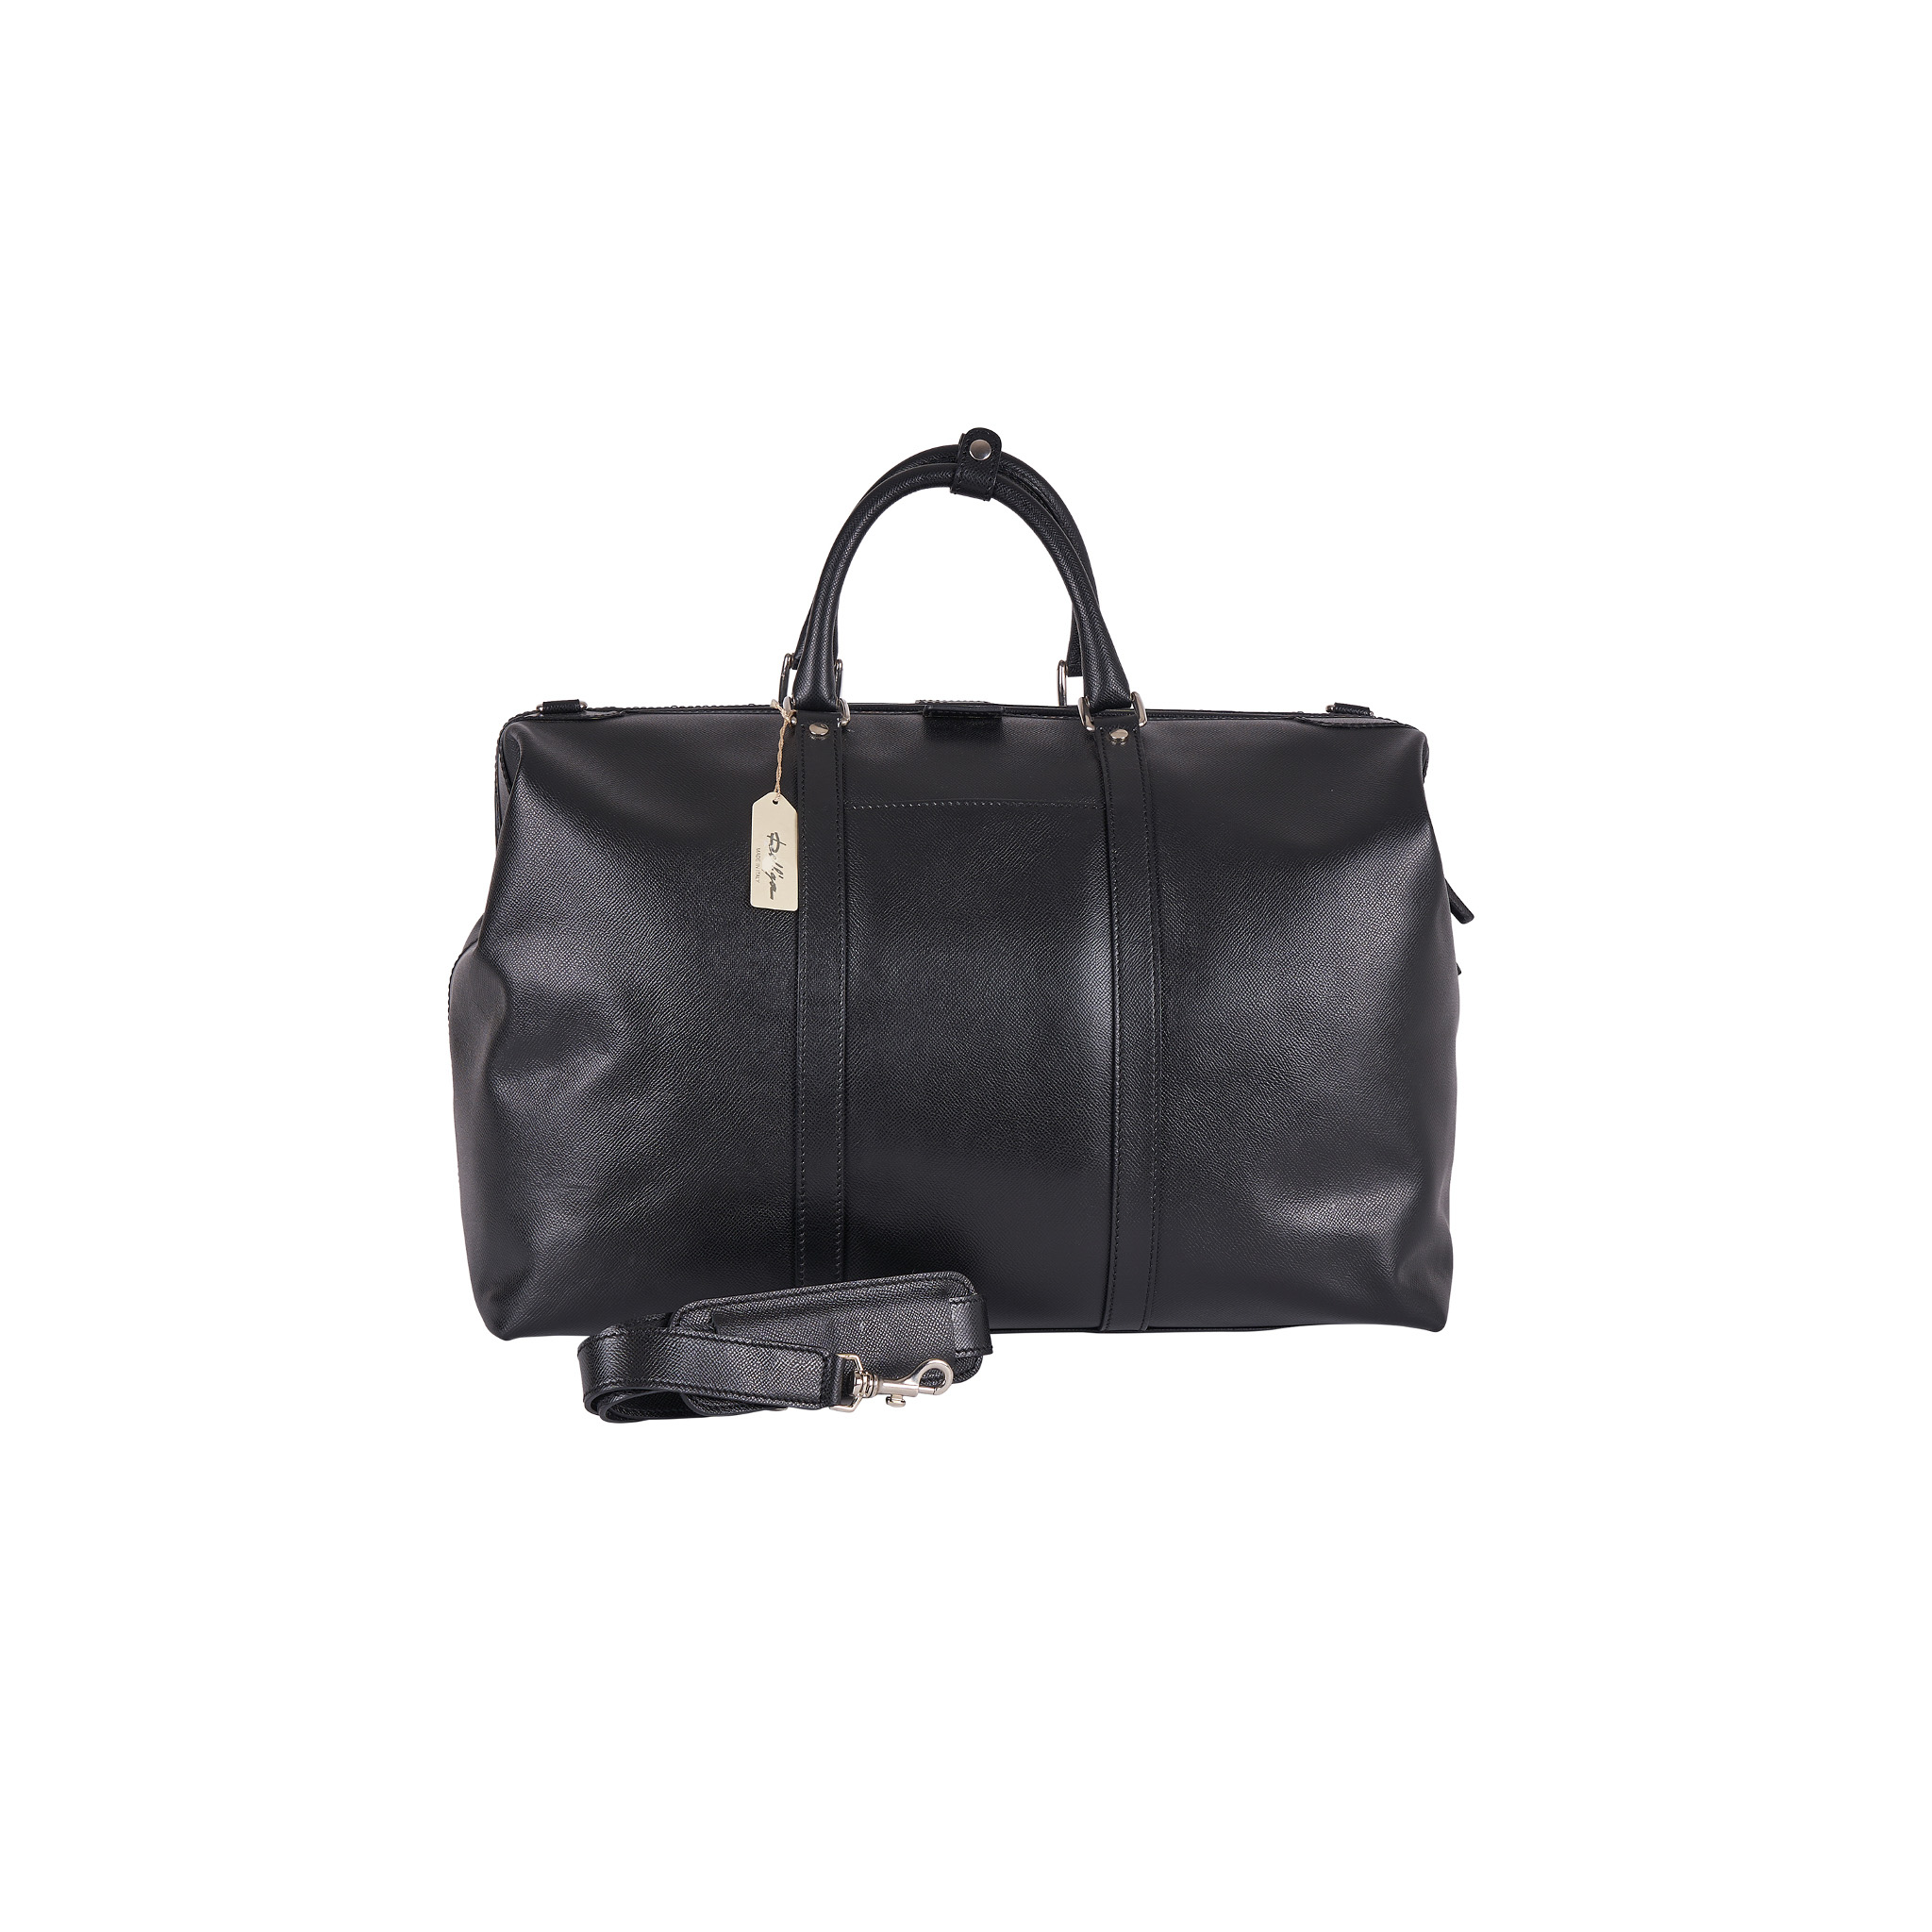 $1400 LUXURY DELL'GA MILANO Leather Duffle Bag Travel